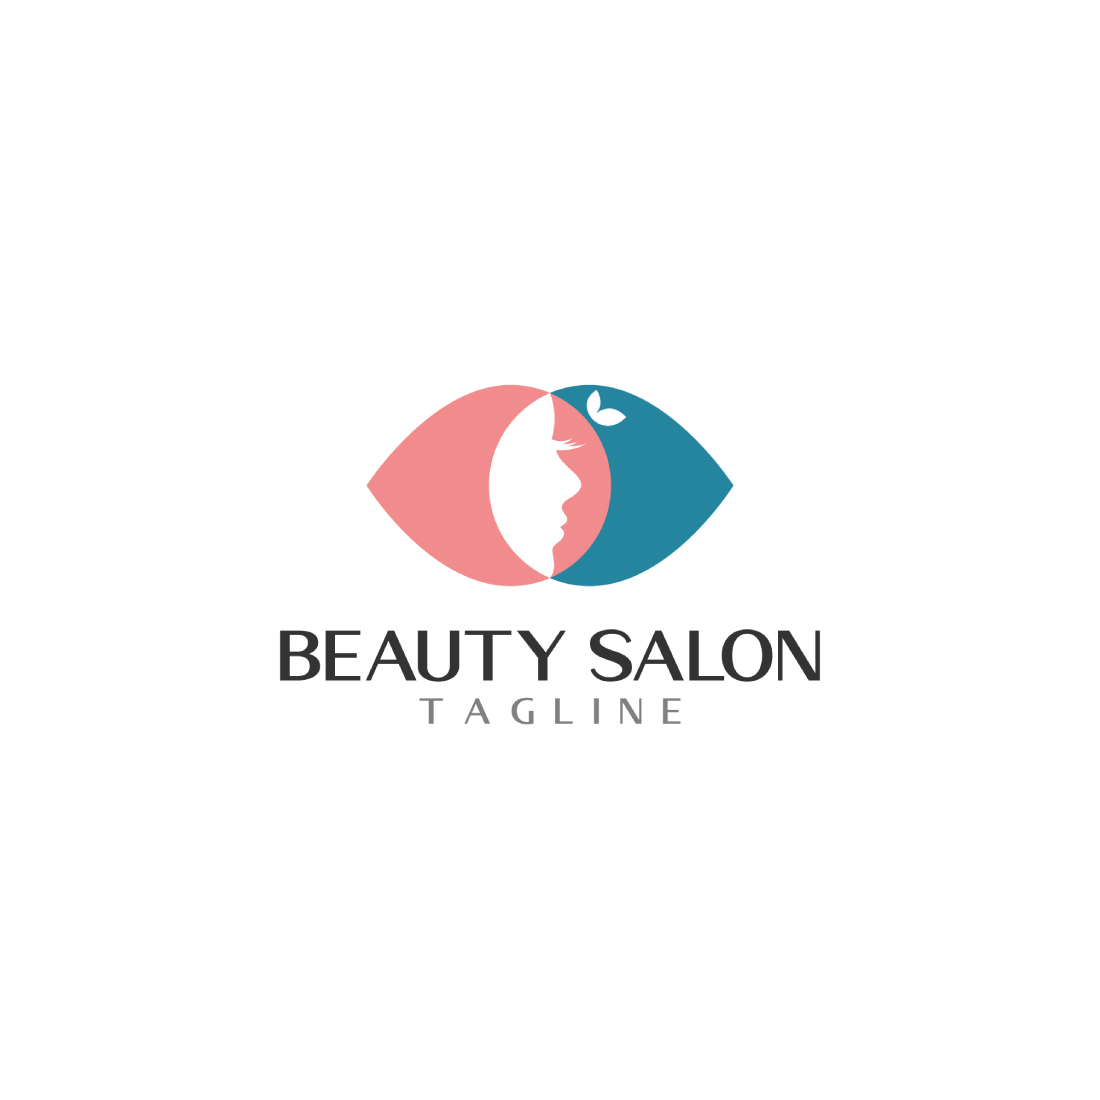 Beauty Salon Logo cover image.